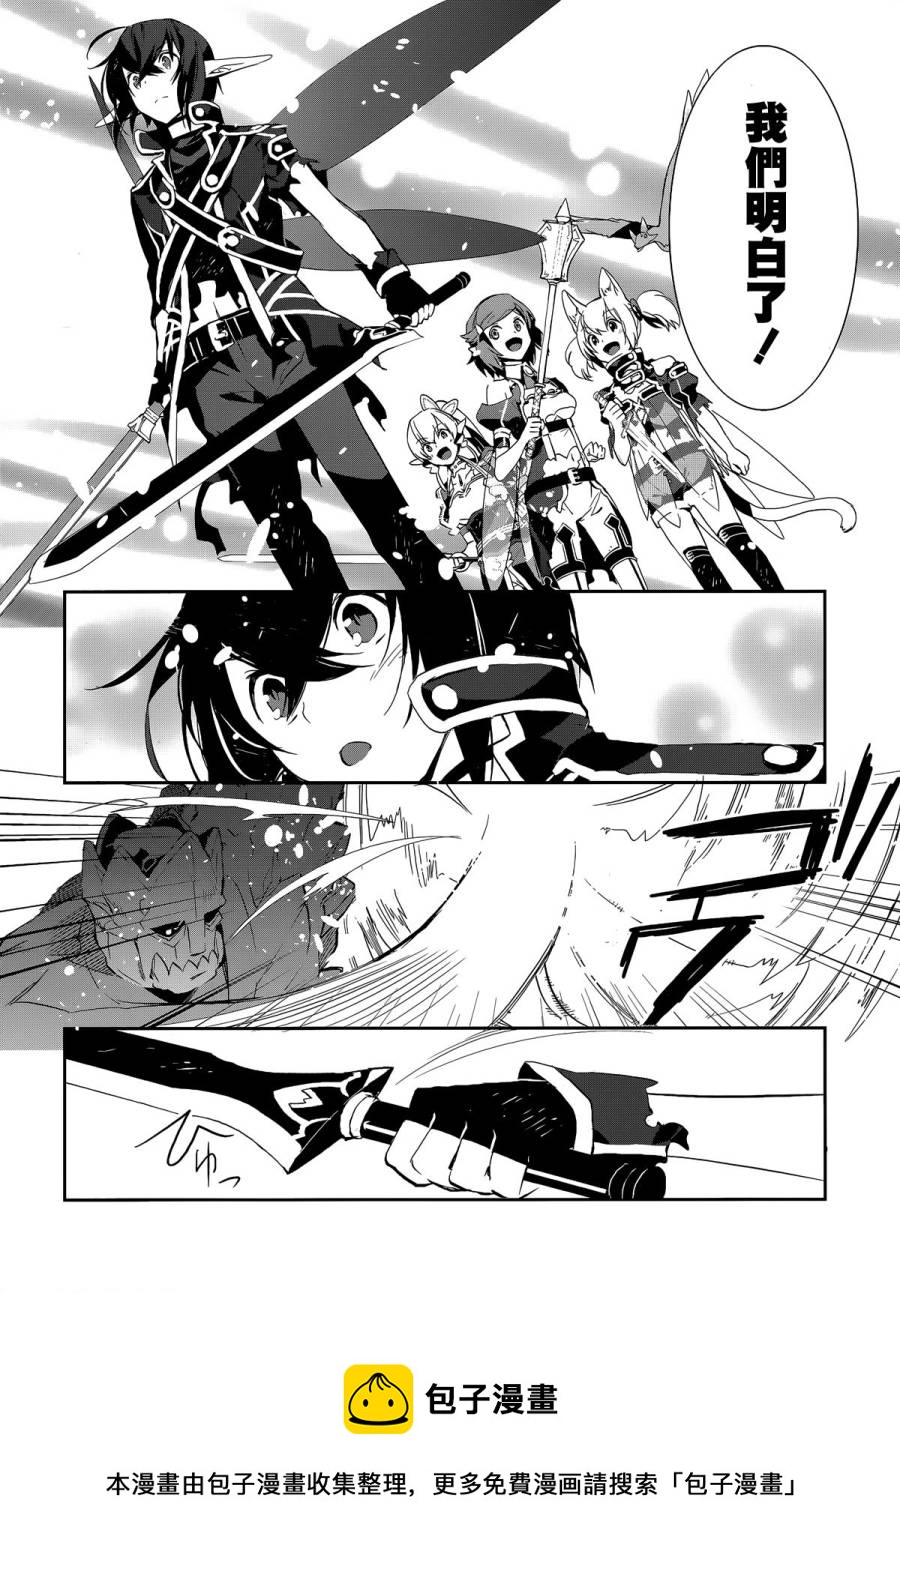 Sword Art Online少女們的樂章 - 第05話 - 1